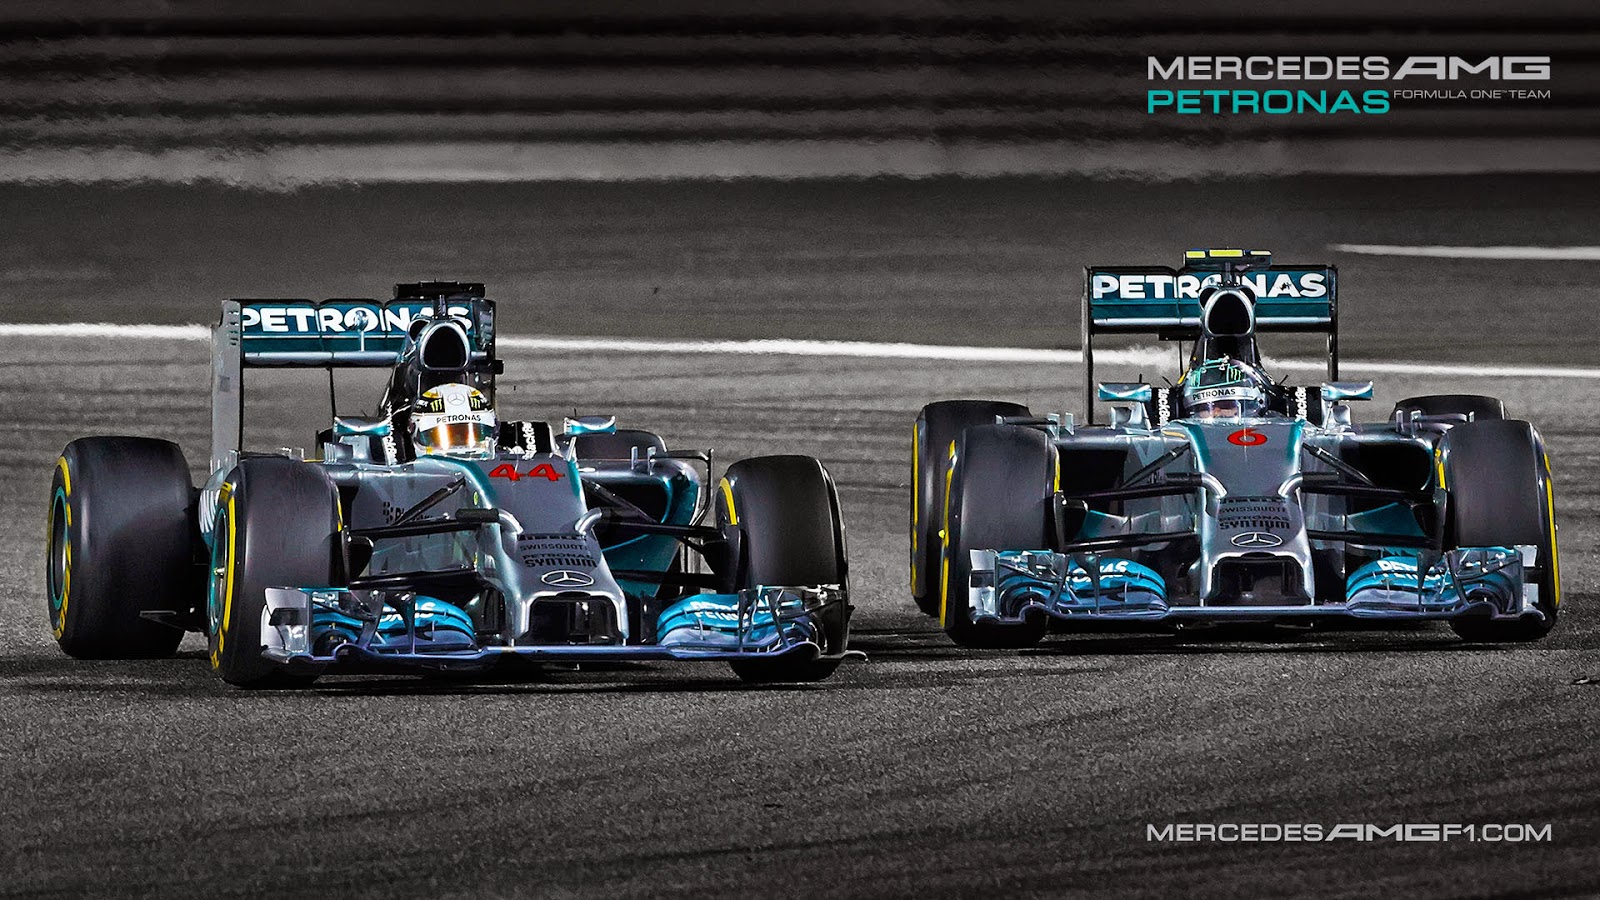 Mercedes Amg Petronas W05 F1 Wallpaper Via Kfzoom